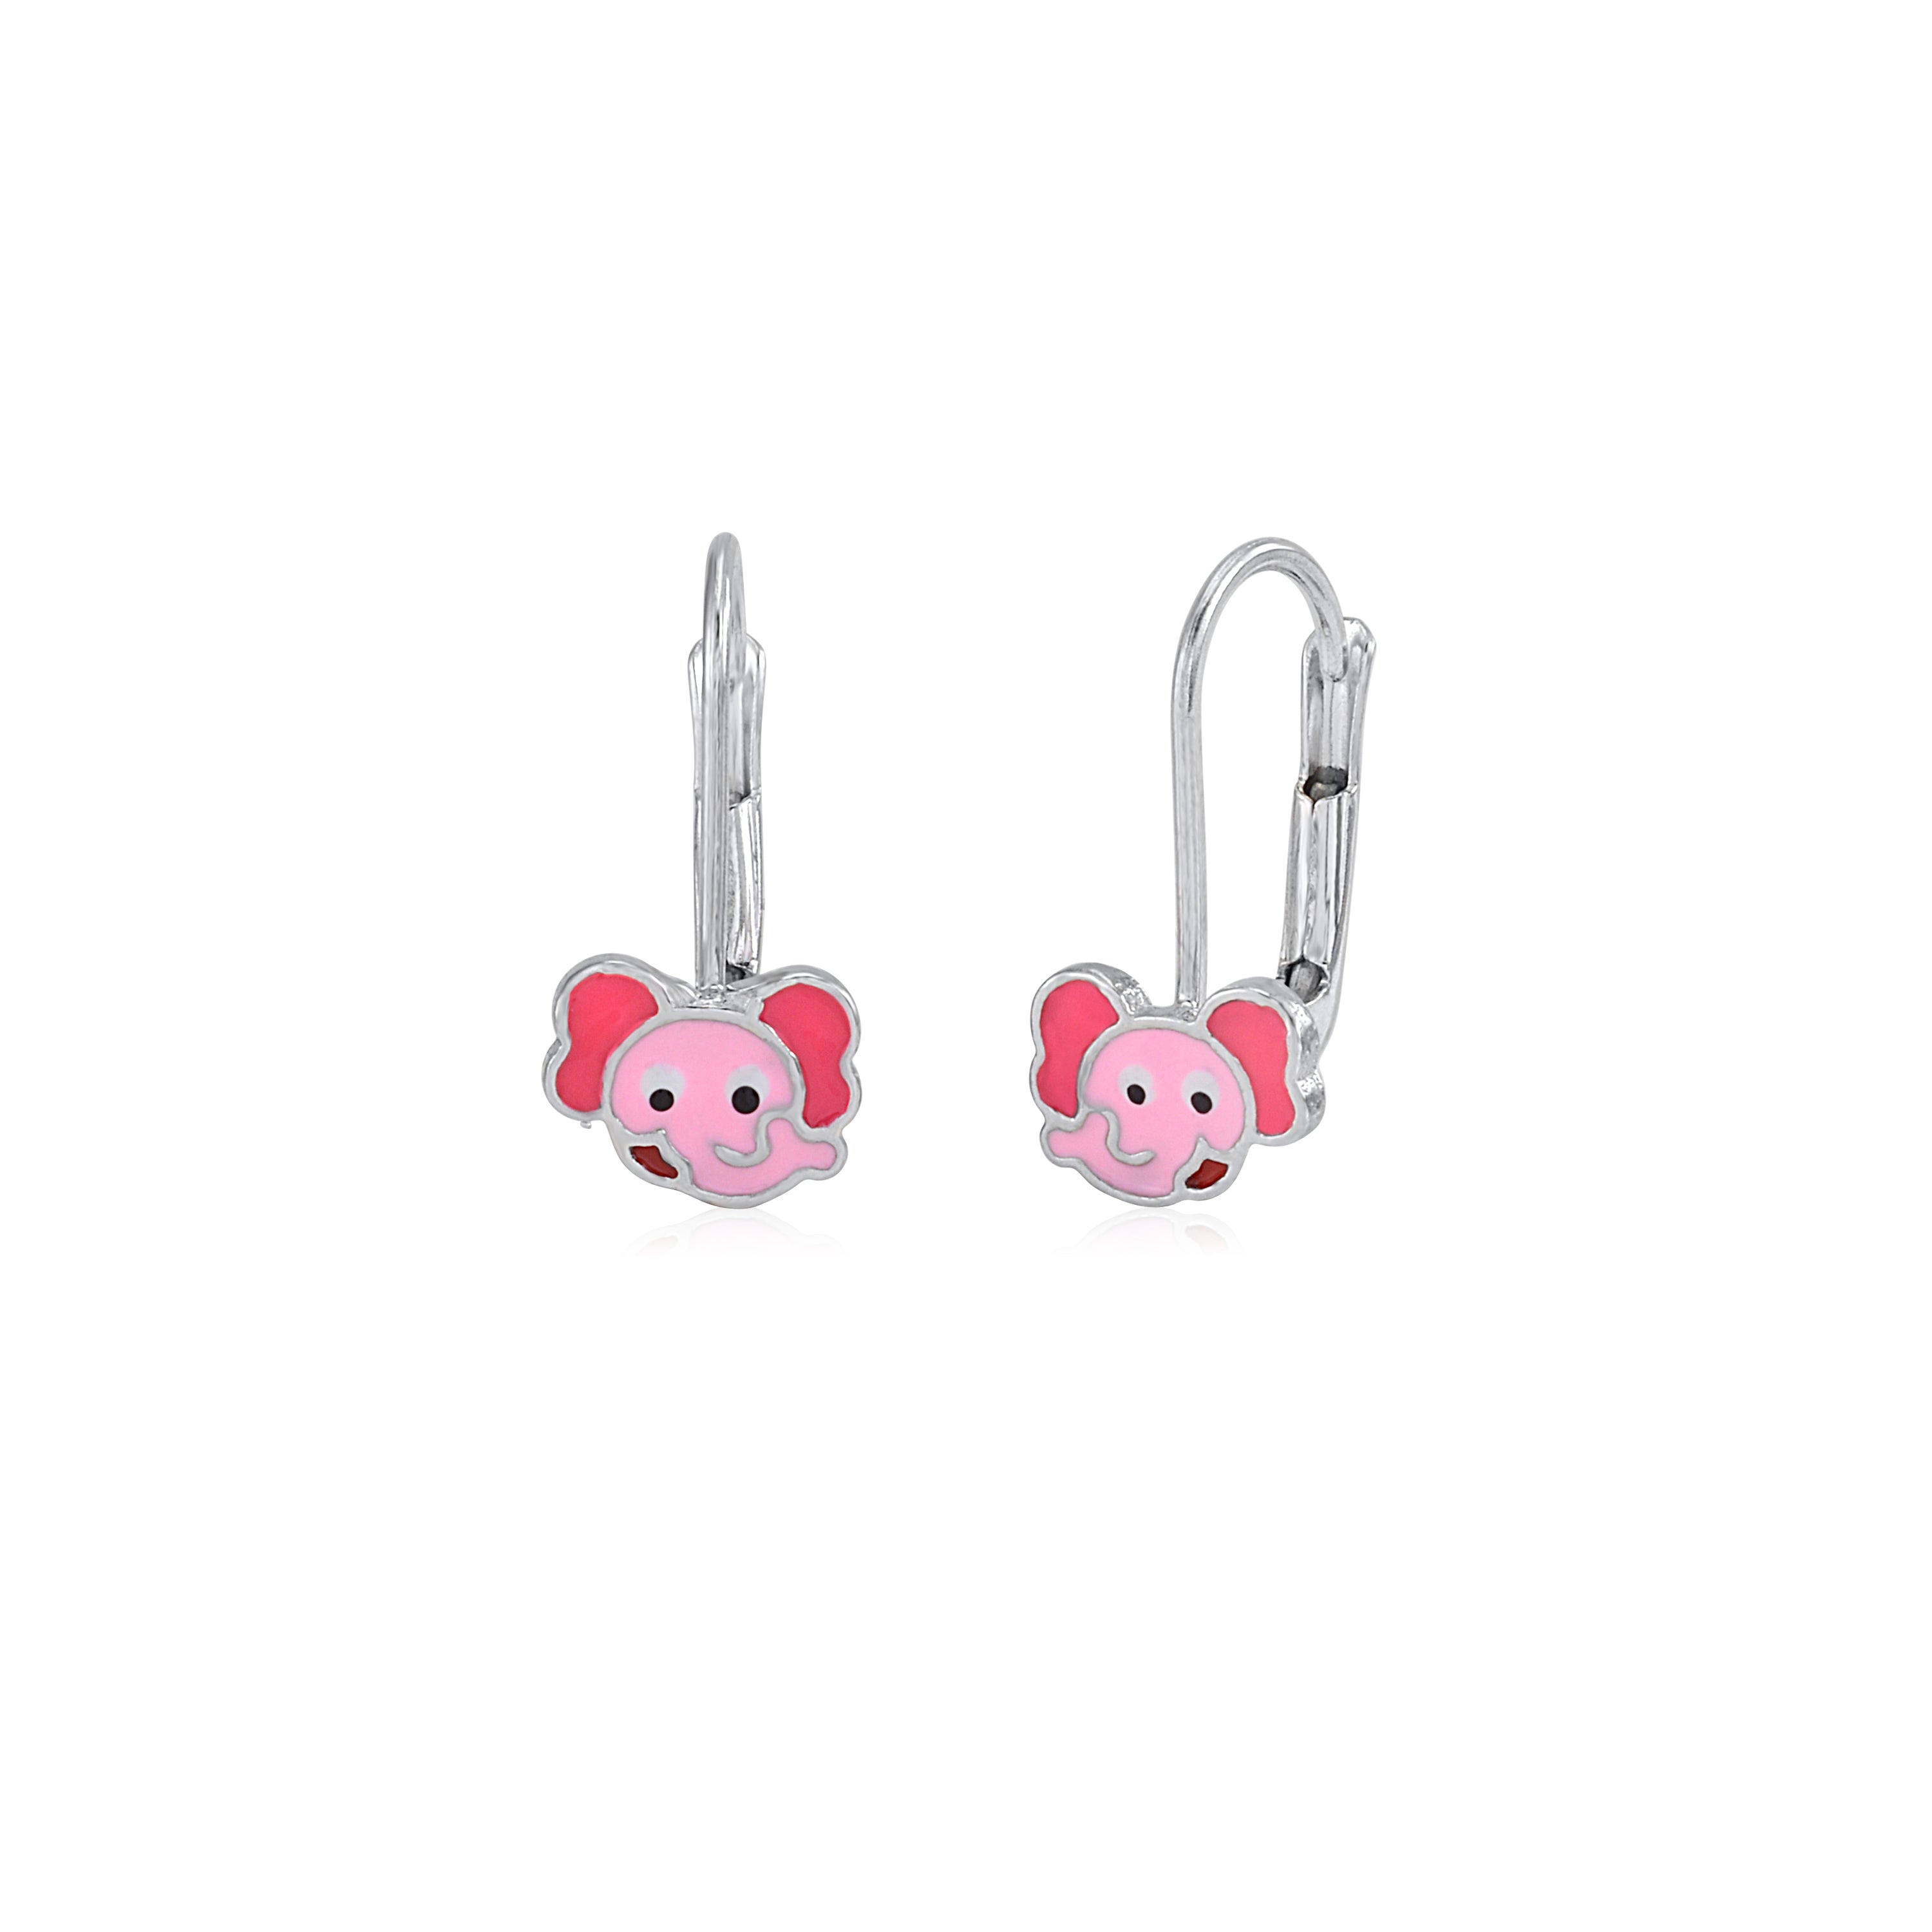 Childrens Sterling Silver 925 Cute Elephant Earrings Leverback with Pink Enamel